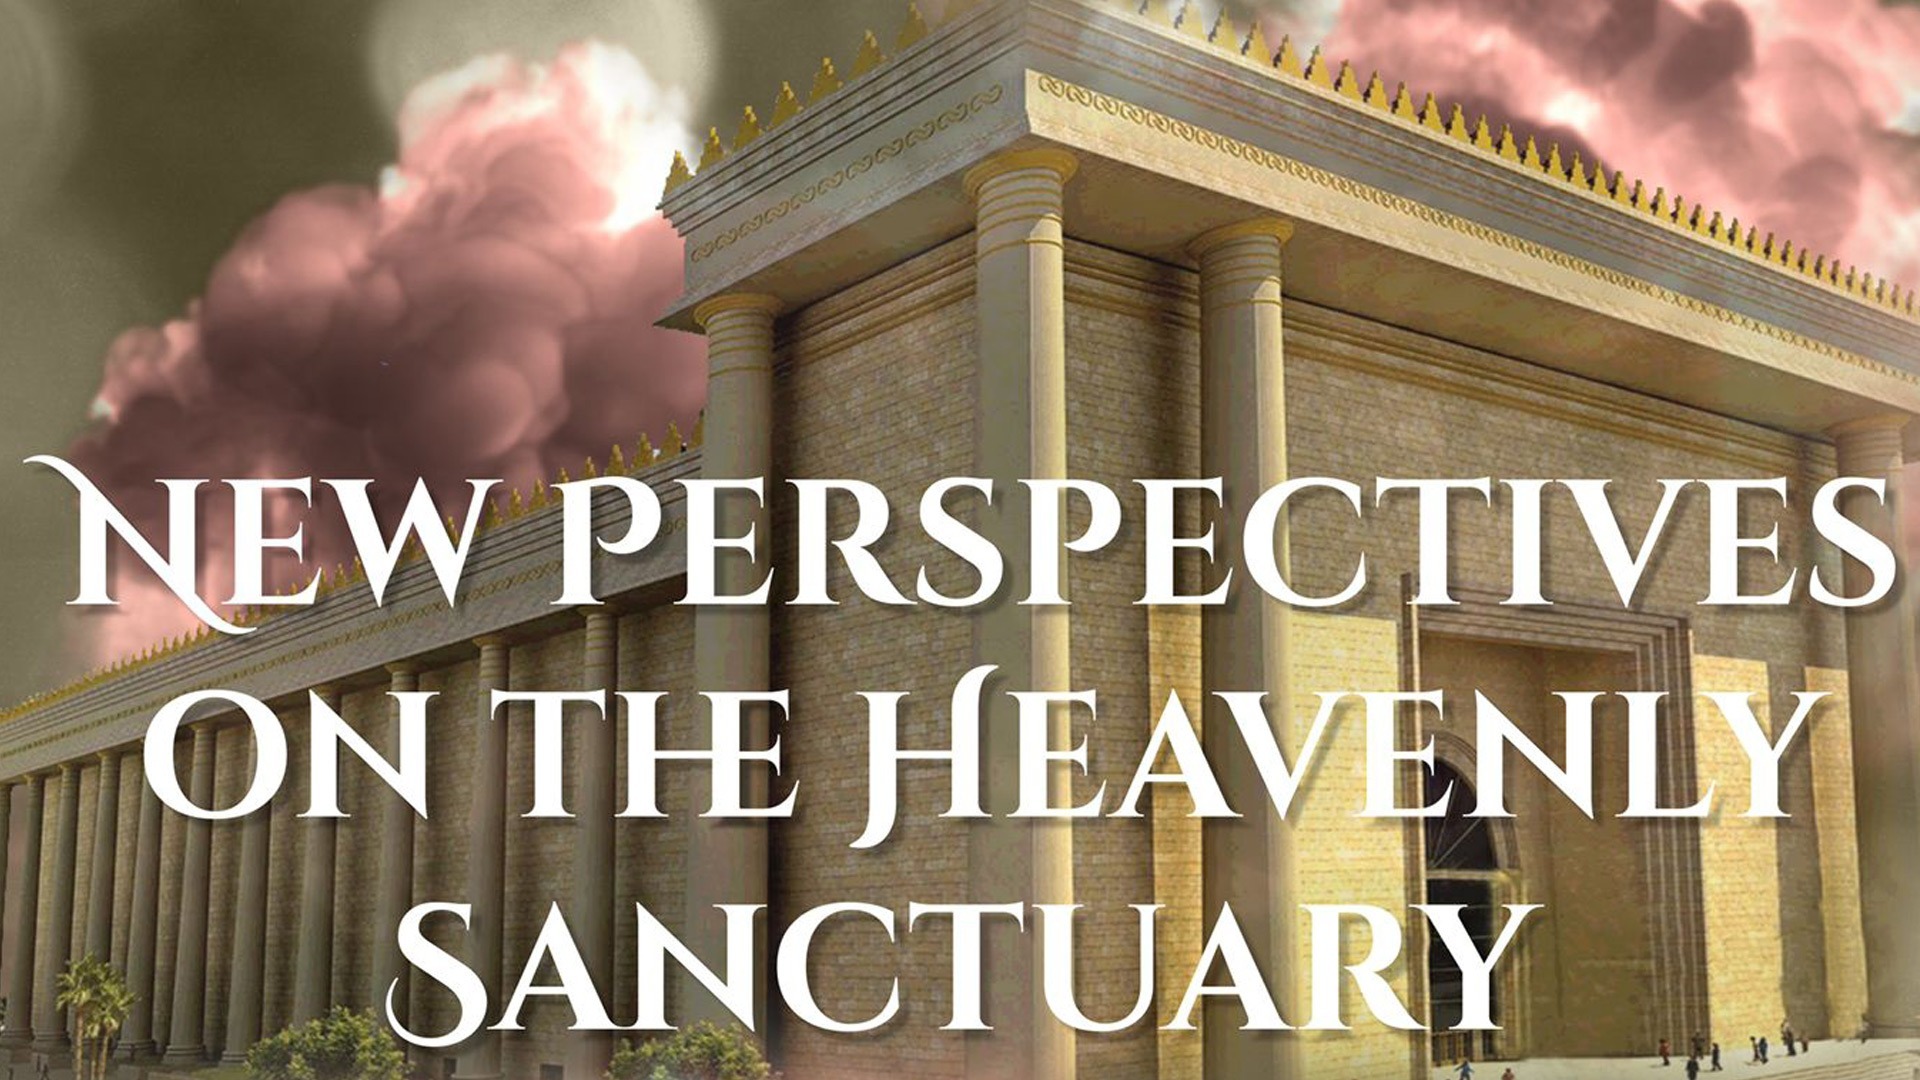 The Sanctuary: A Window Into God’s Heart